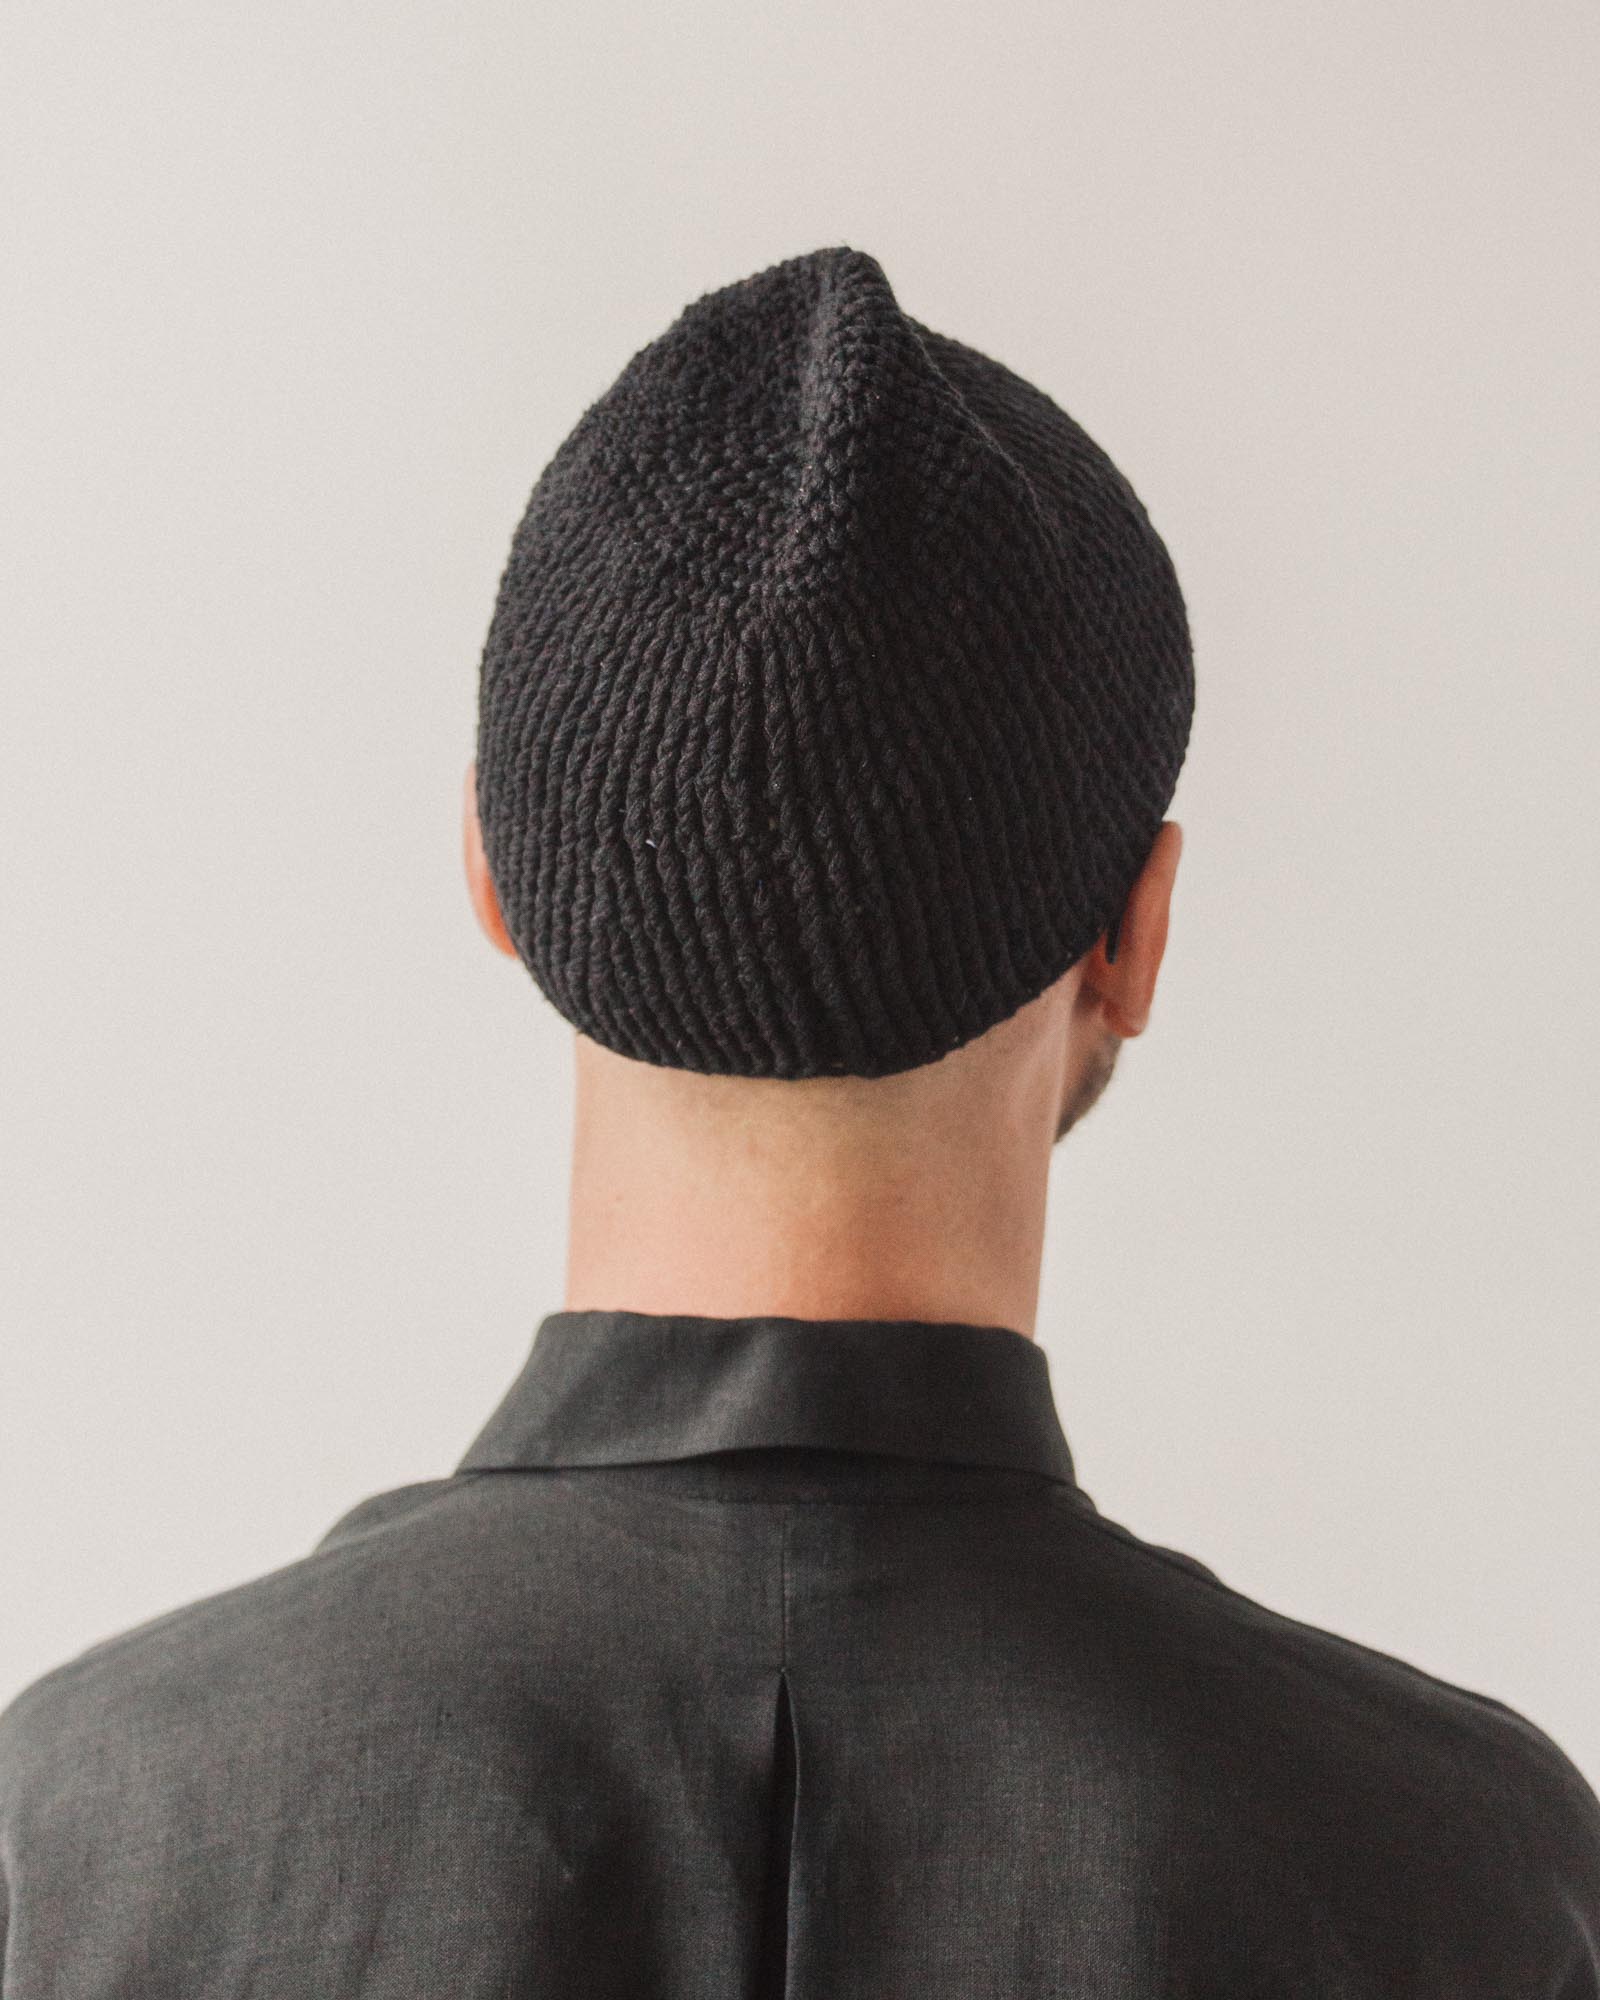 Jan-Jan Van Essche Beanie #3, Black Linen Hat